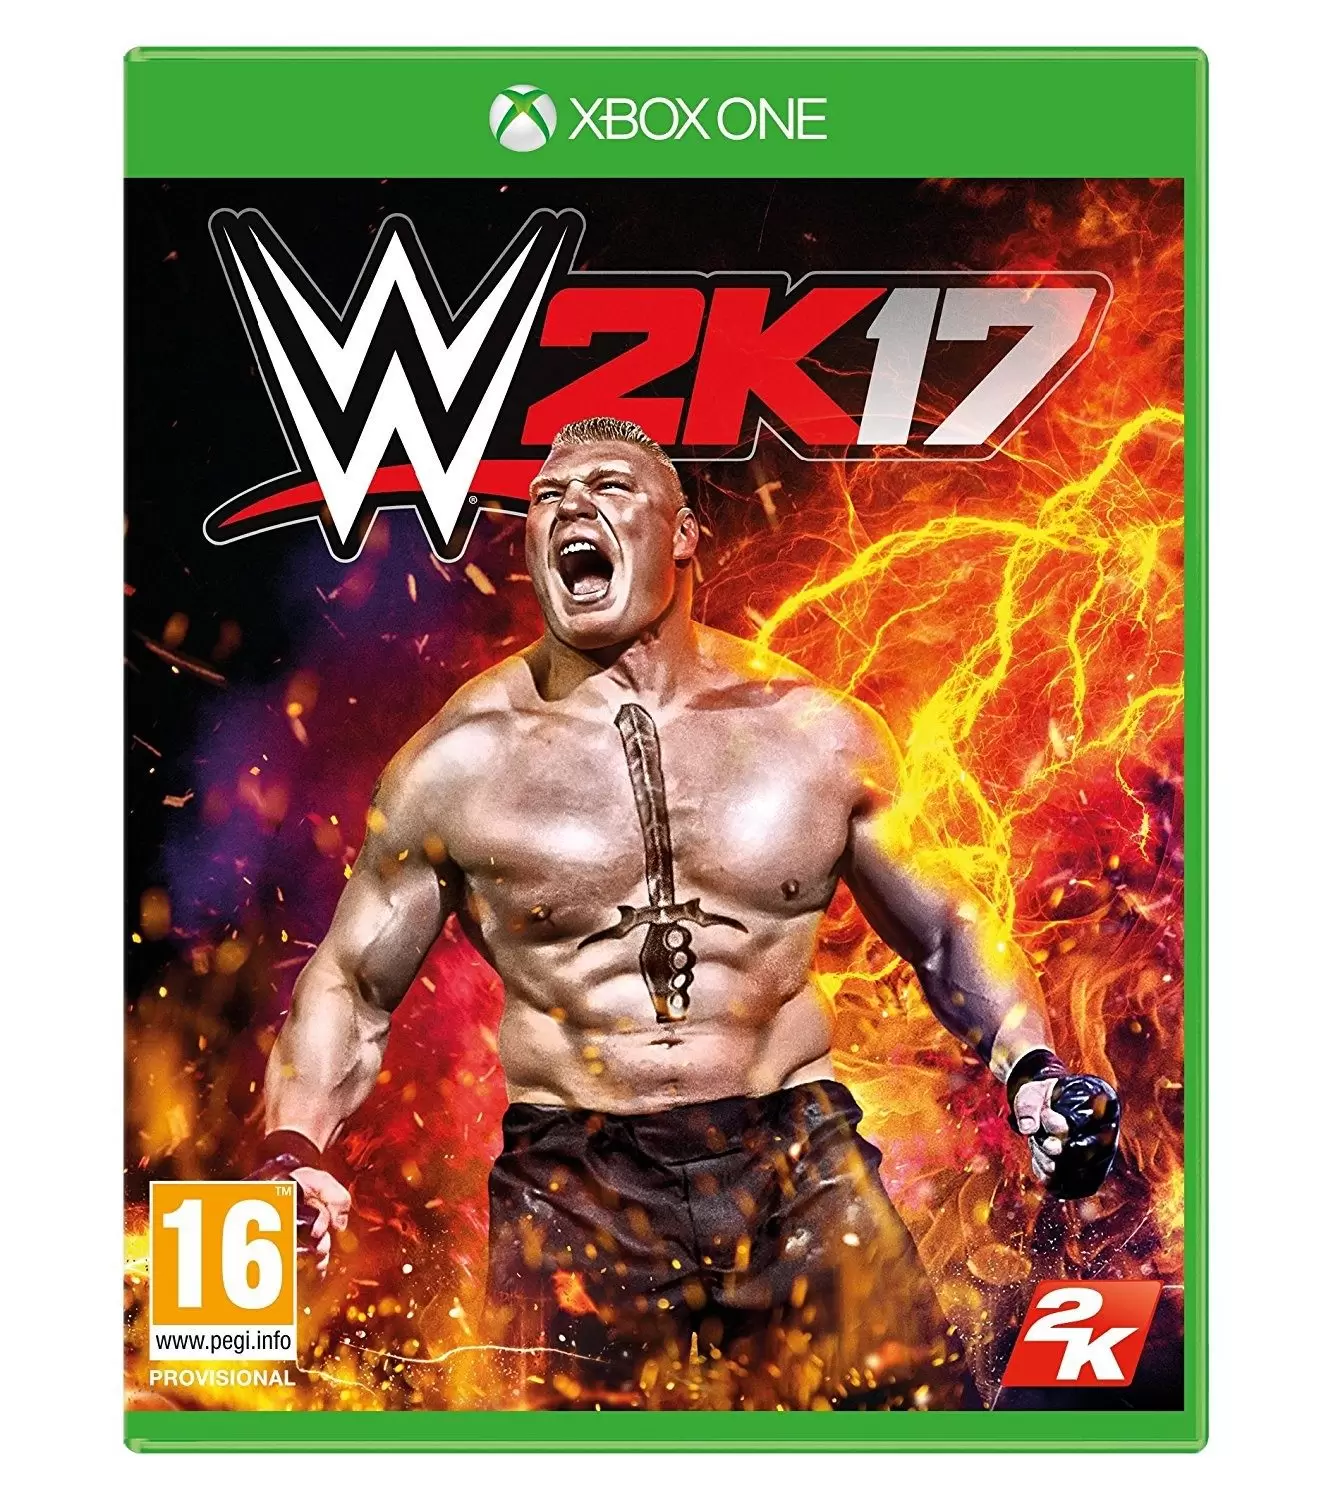 XBOX One Games - WWE 2K17